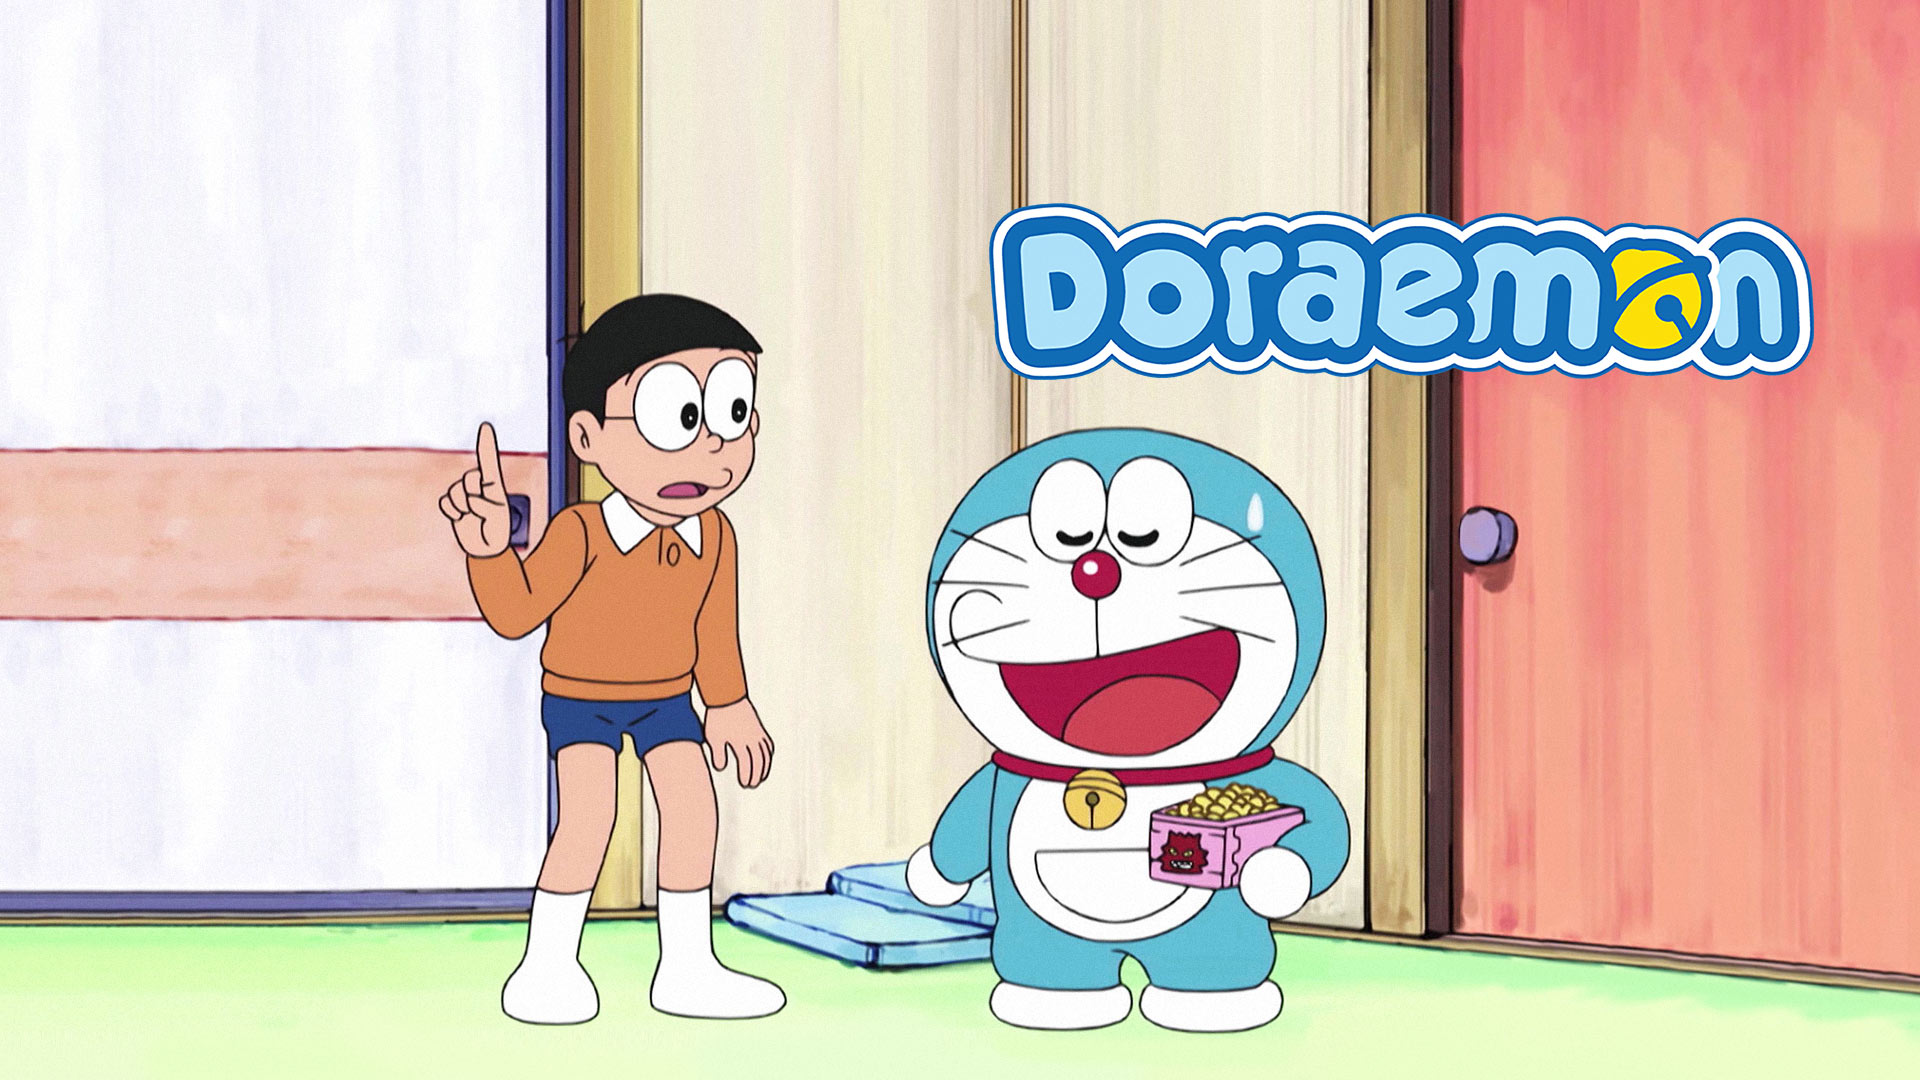 Doraemon - Disney+ Hotstar